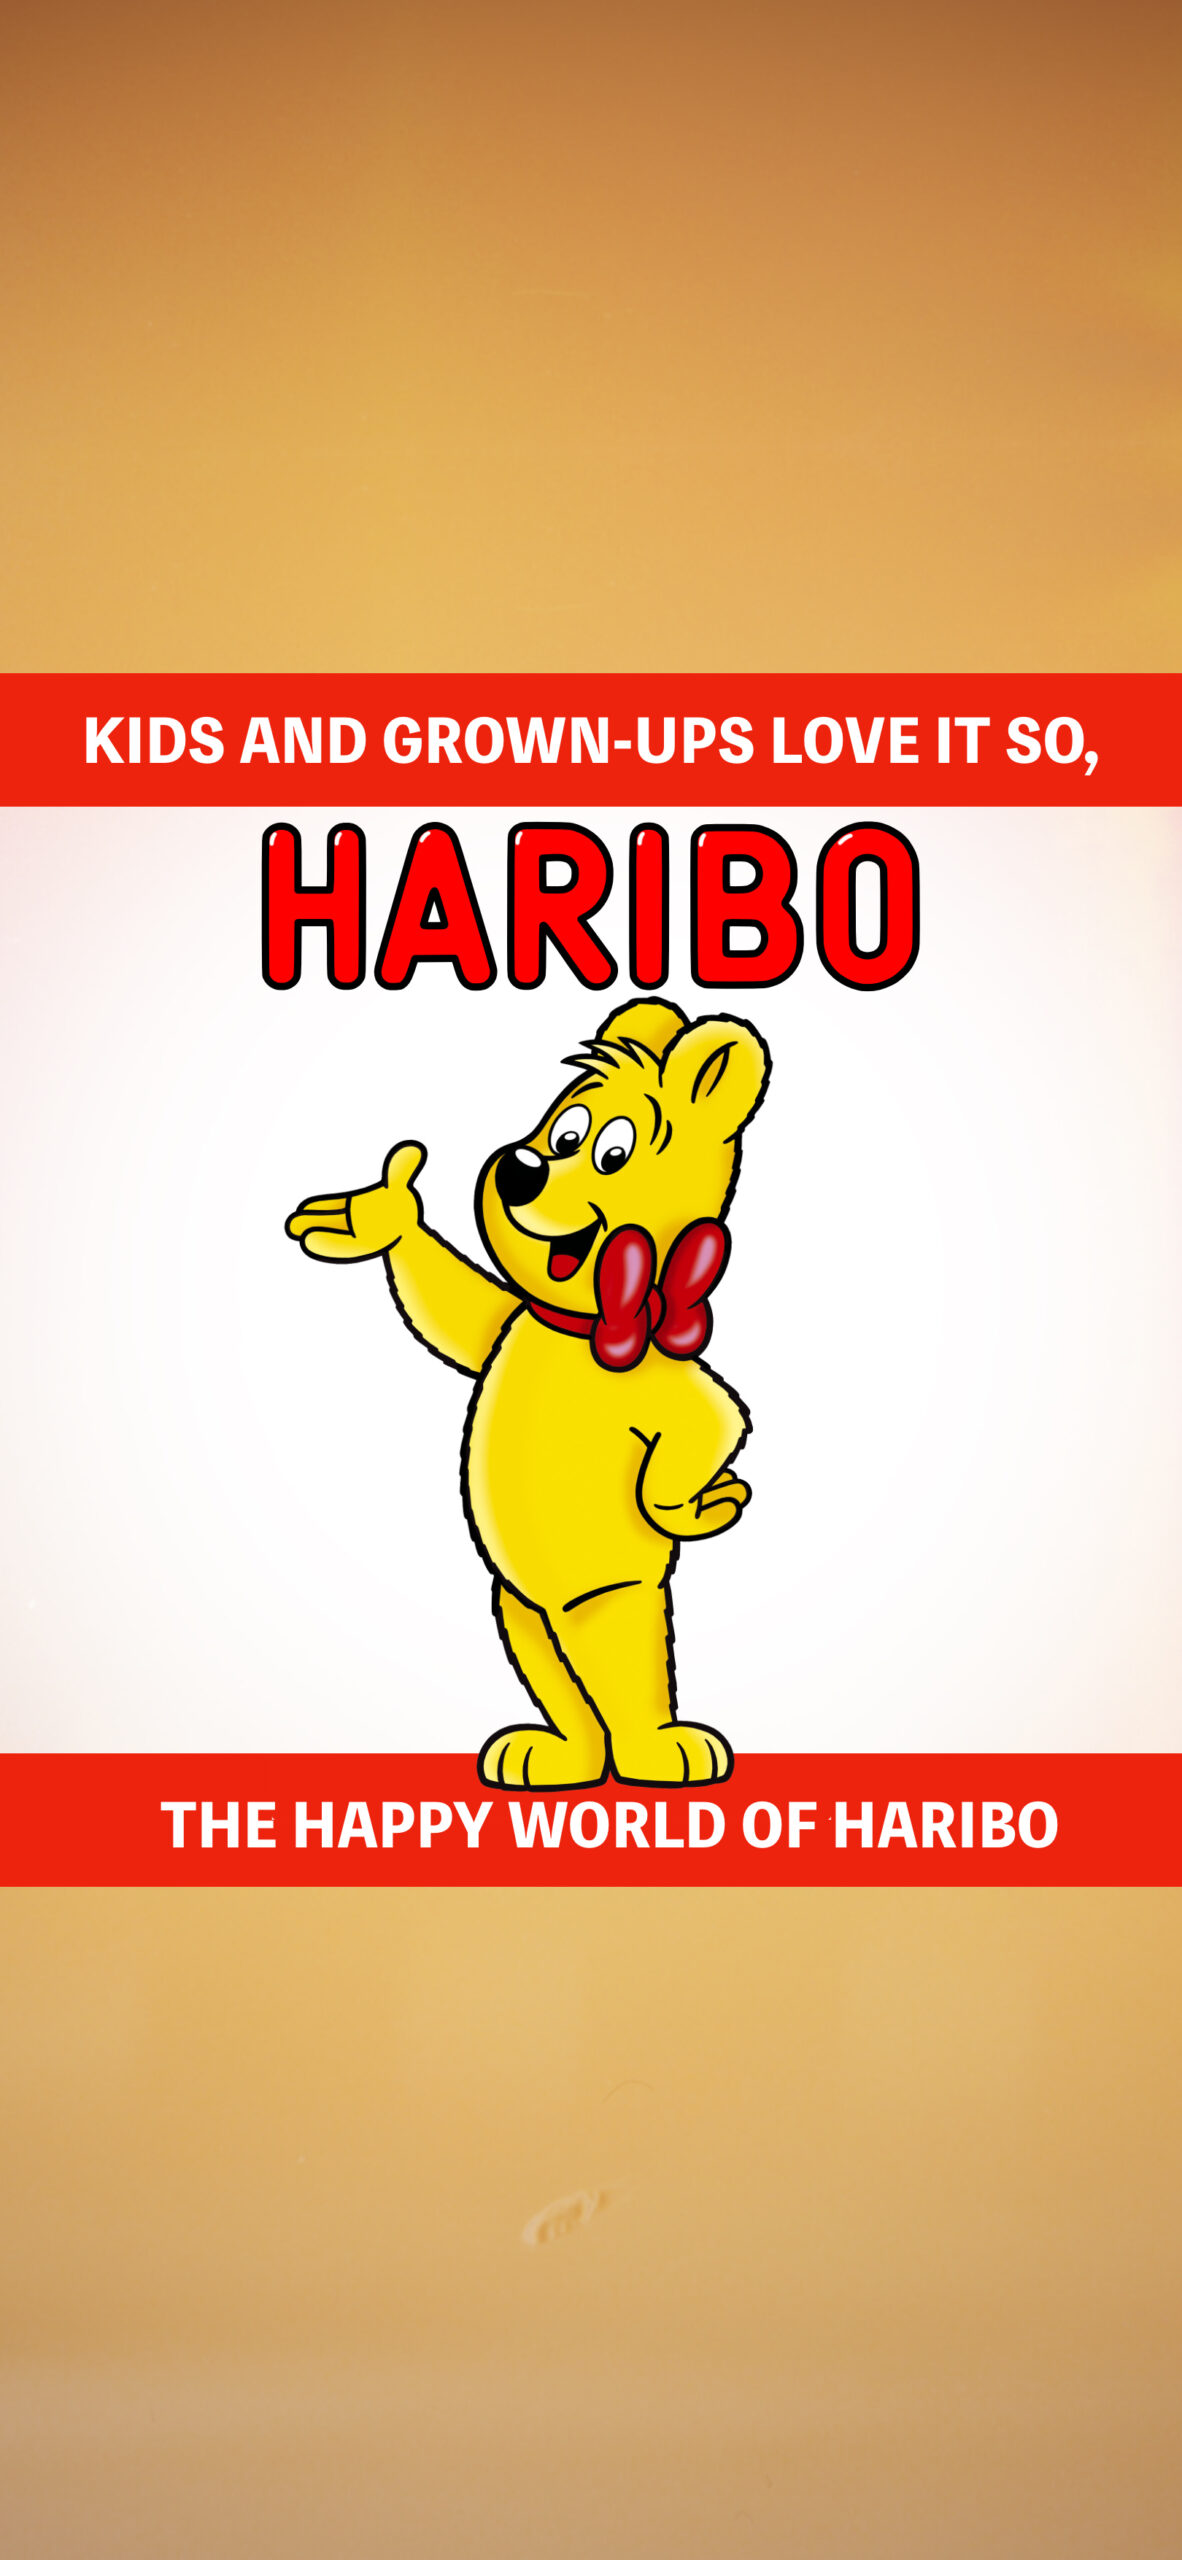 haribo01 scaled - HARIBO/ハリボーの無料高画質スマホ壁紙17枚 [iPhone＆Androidに対応]